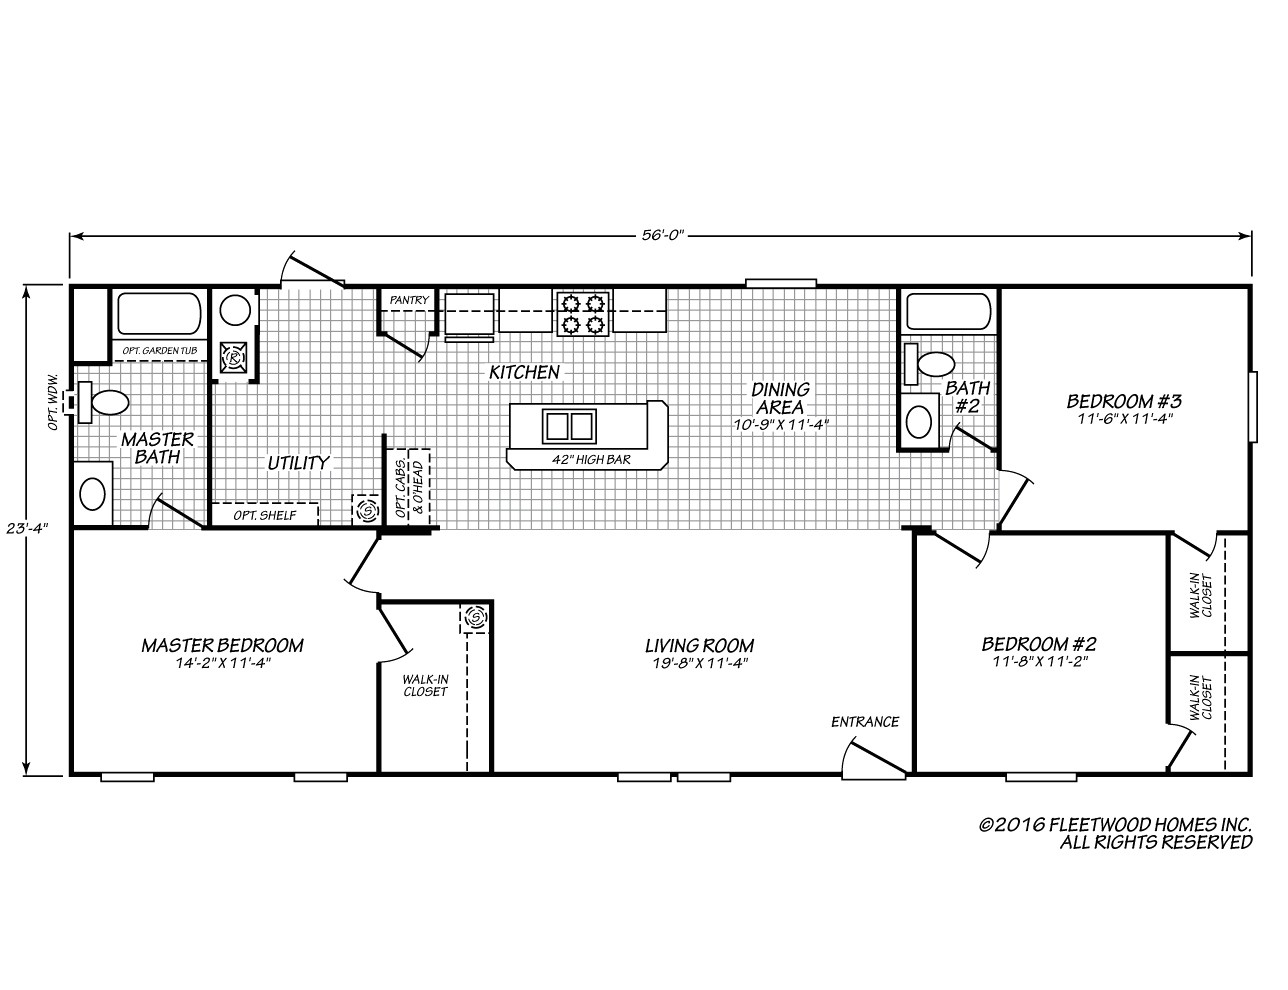 old fleetwood mobile home floor plans